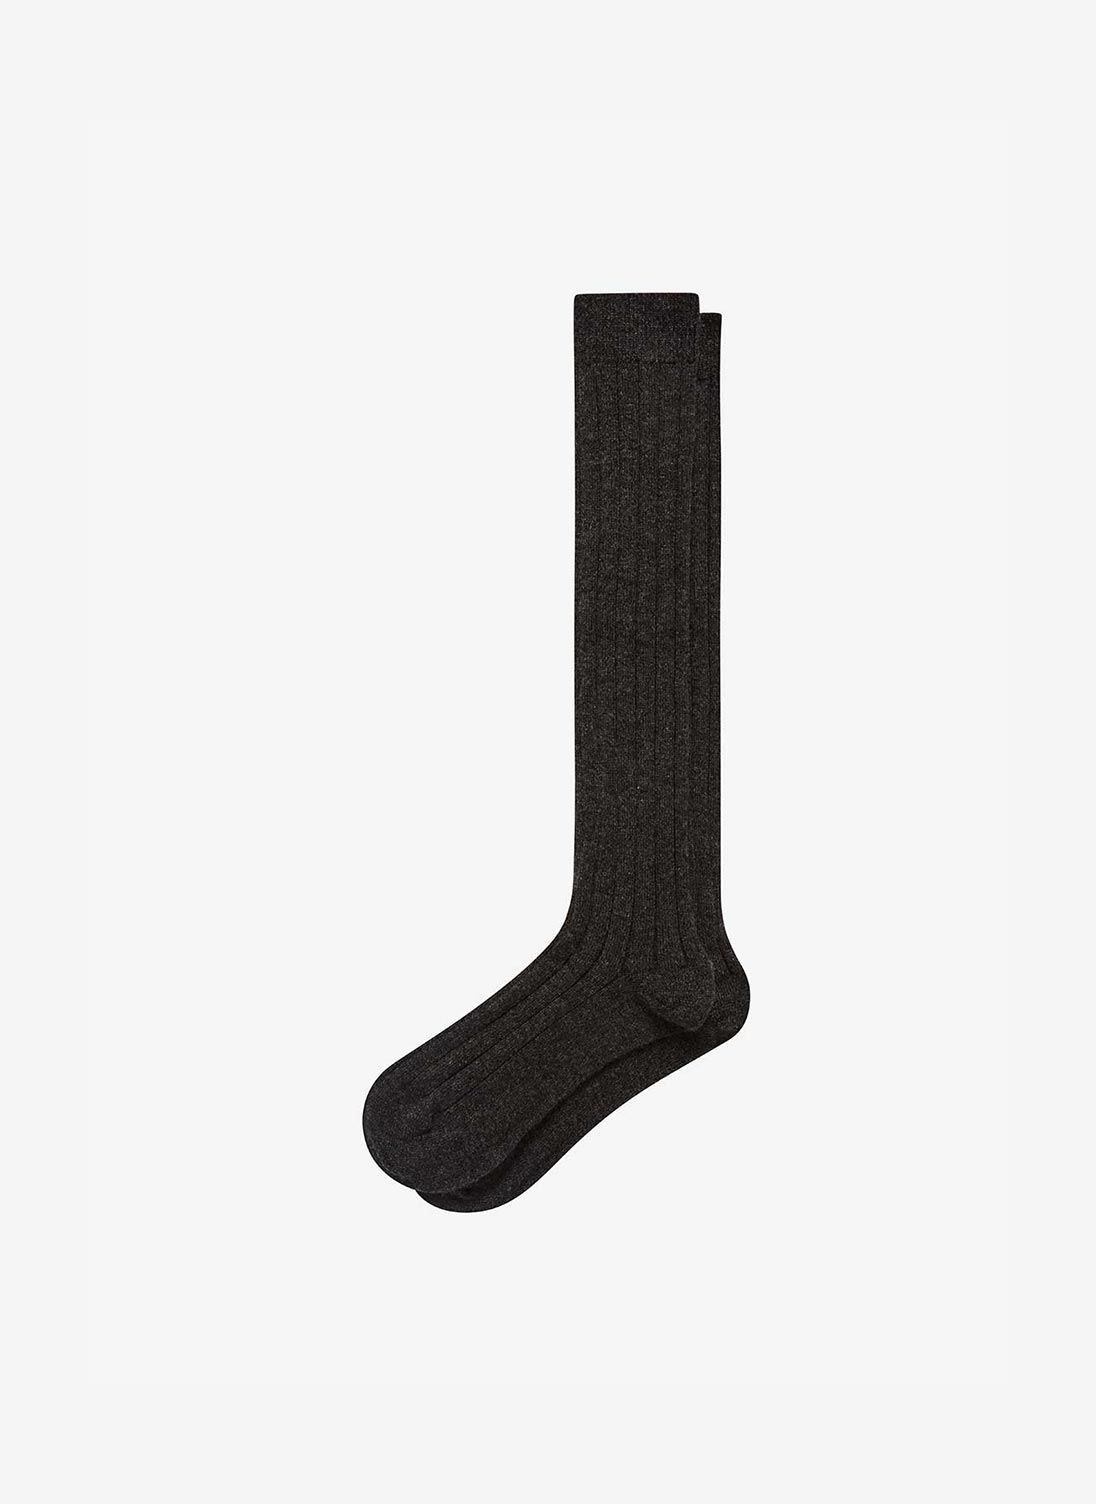 Men’s Cashmere Long Socks Charcoal